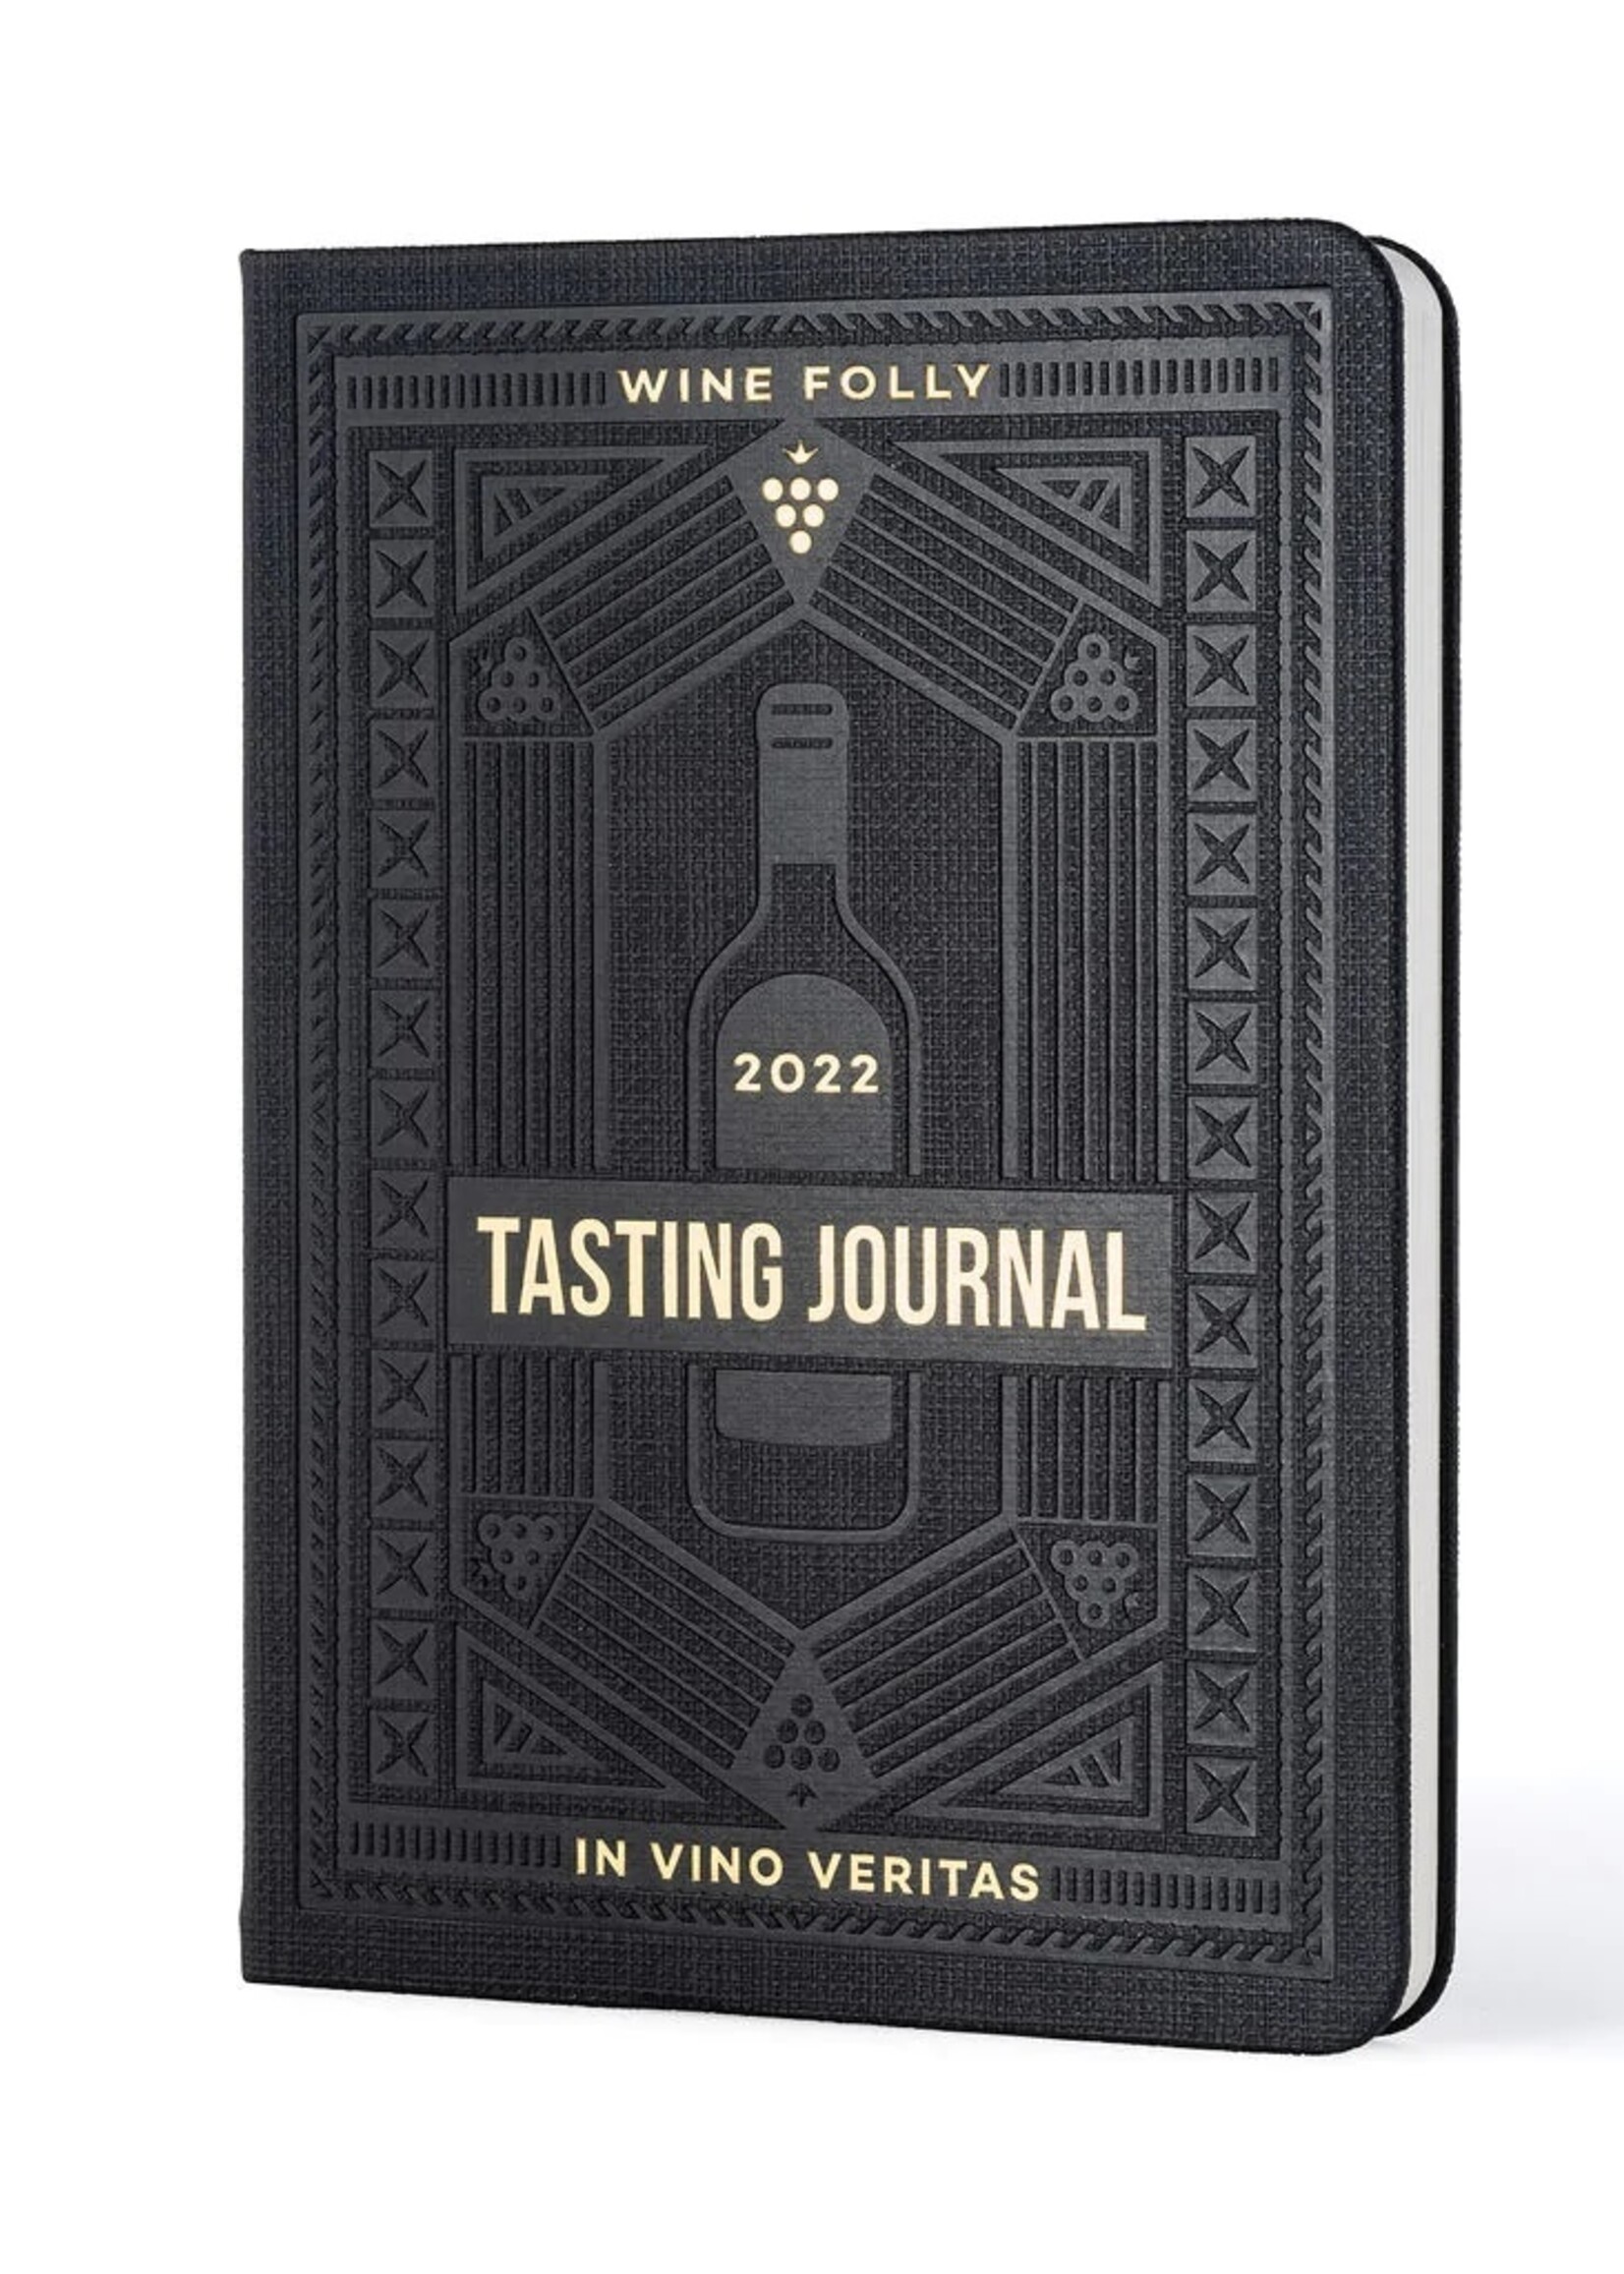 Wine Folly Tasting journal